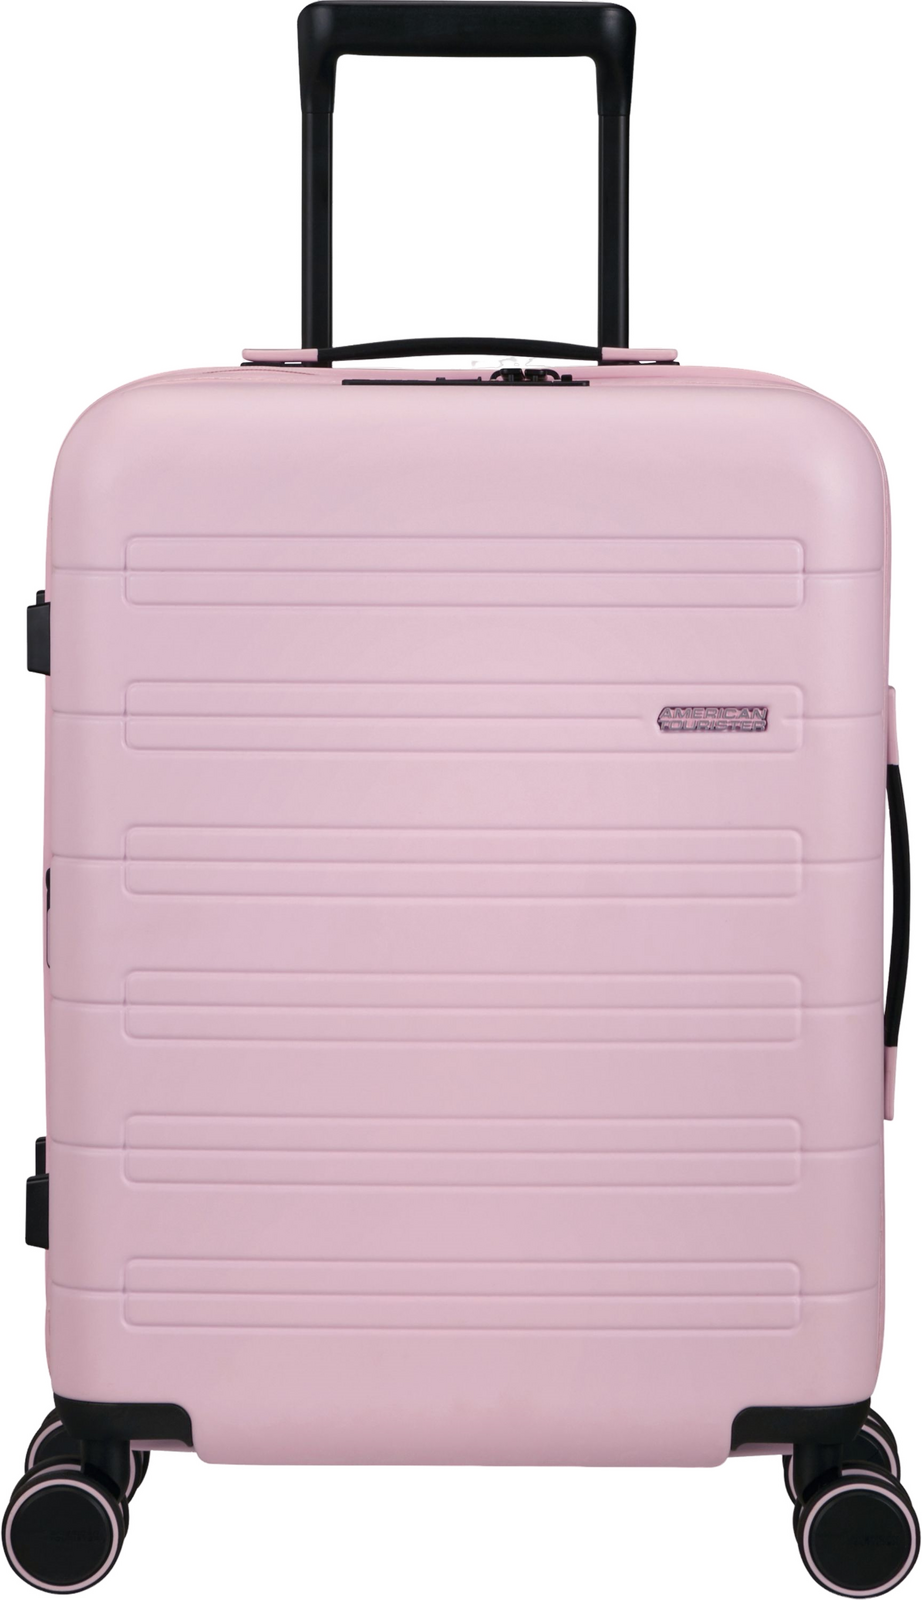 Lifestyle Rucksäck / Tasche American Tourister Novastream Spinner EXP 55/20 Cabin Soft Pink 36/41 L Gepäck